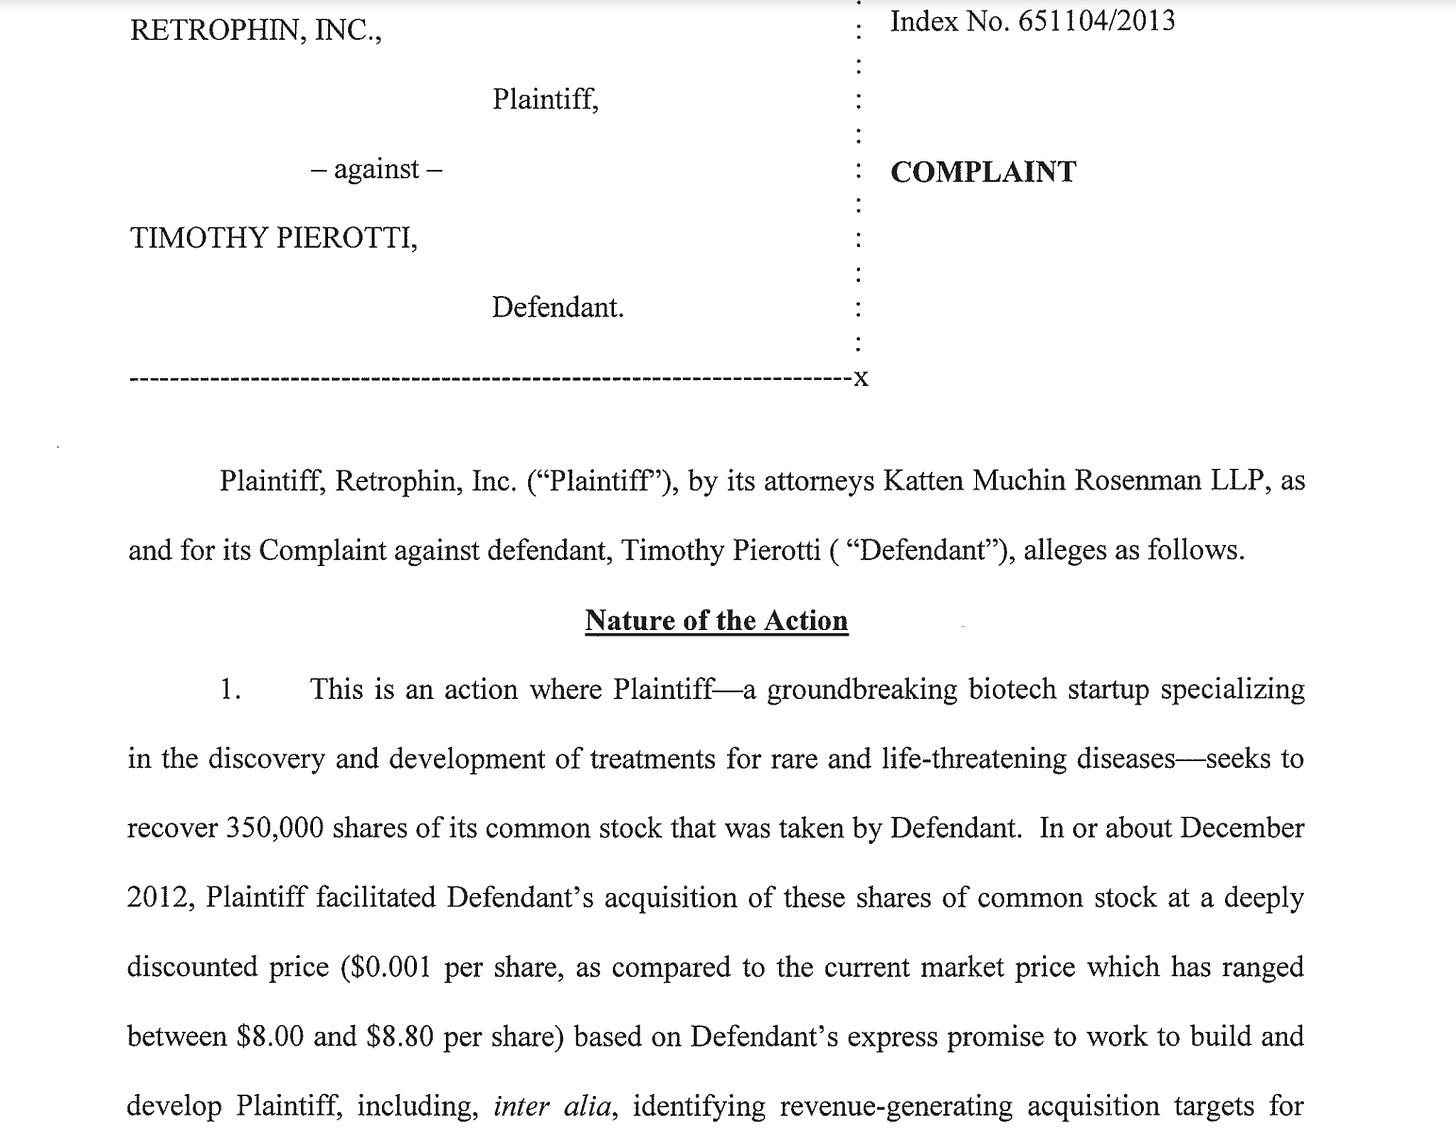 A screenshot of the complaint Martin Shkreli filed against Pierotti.